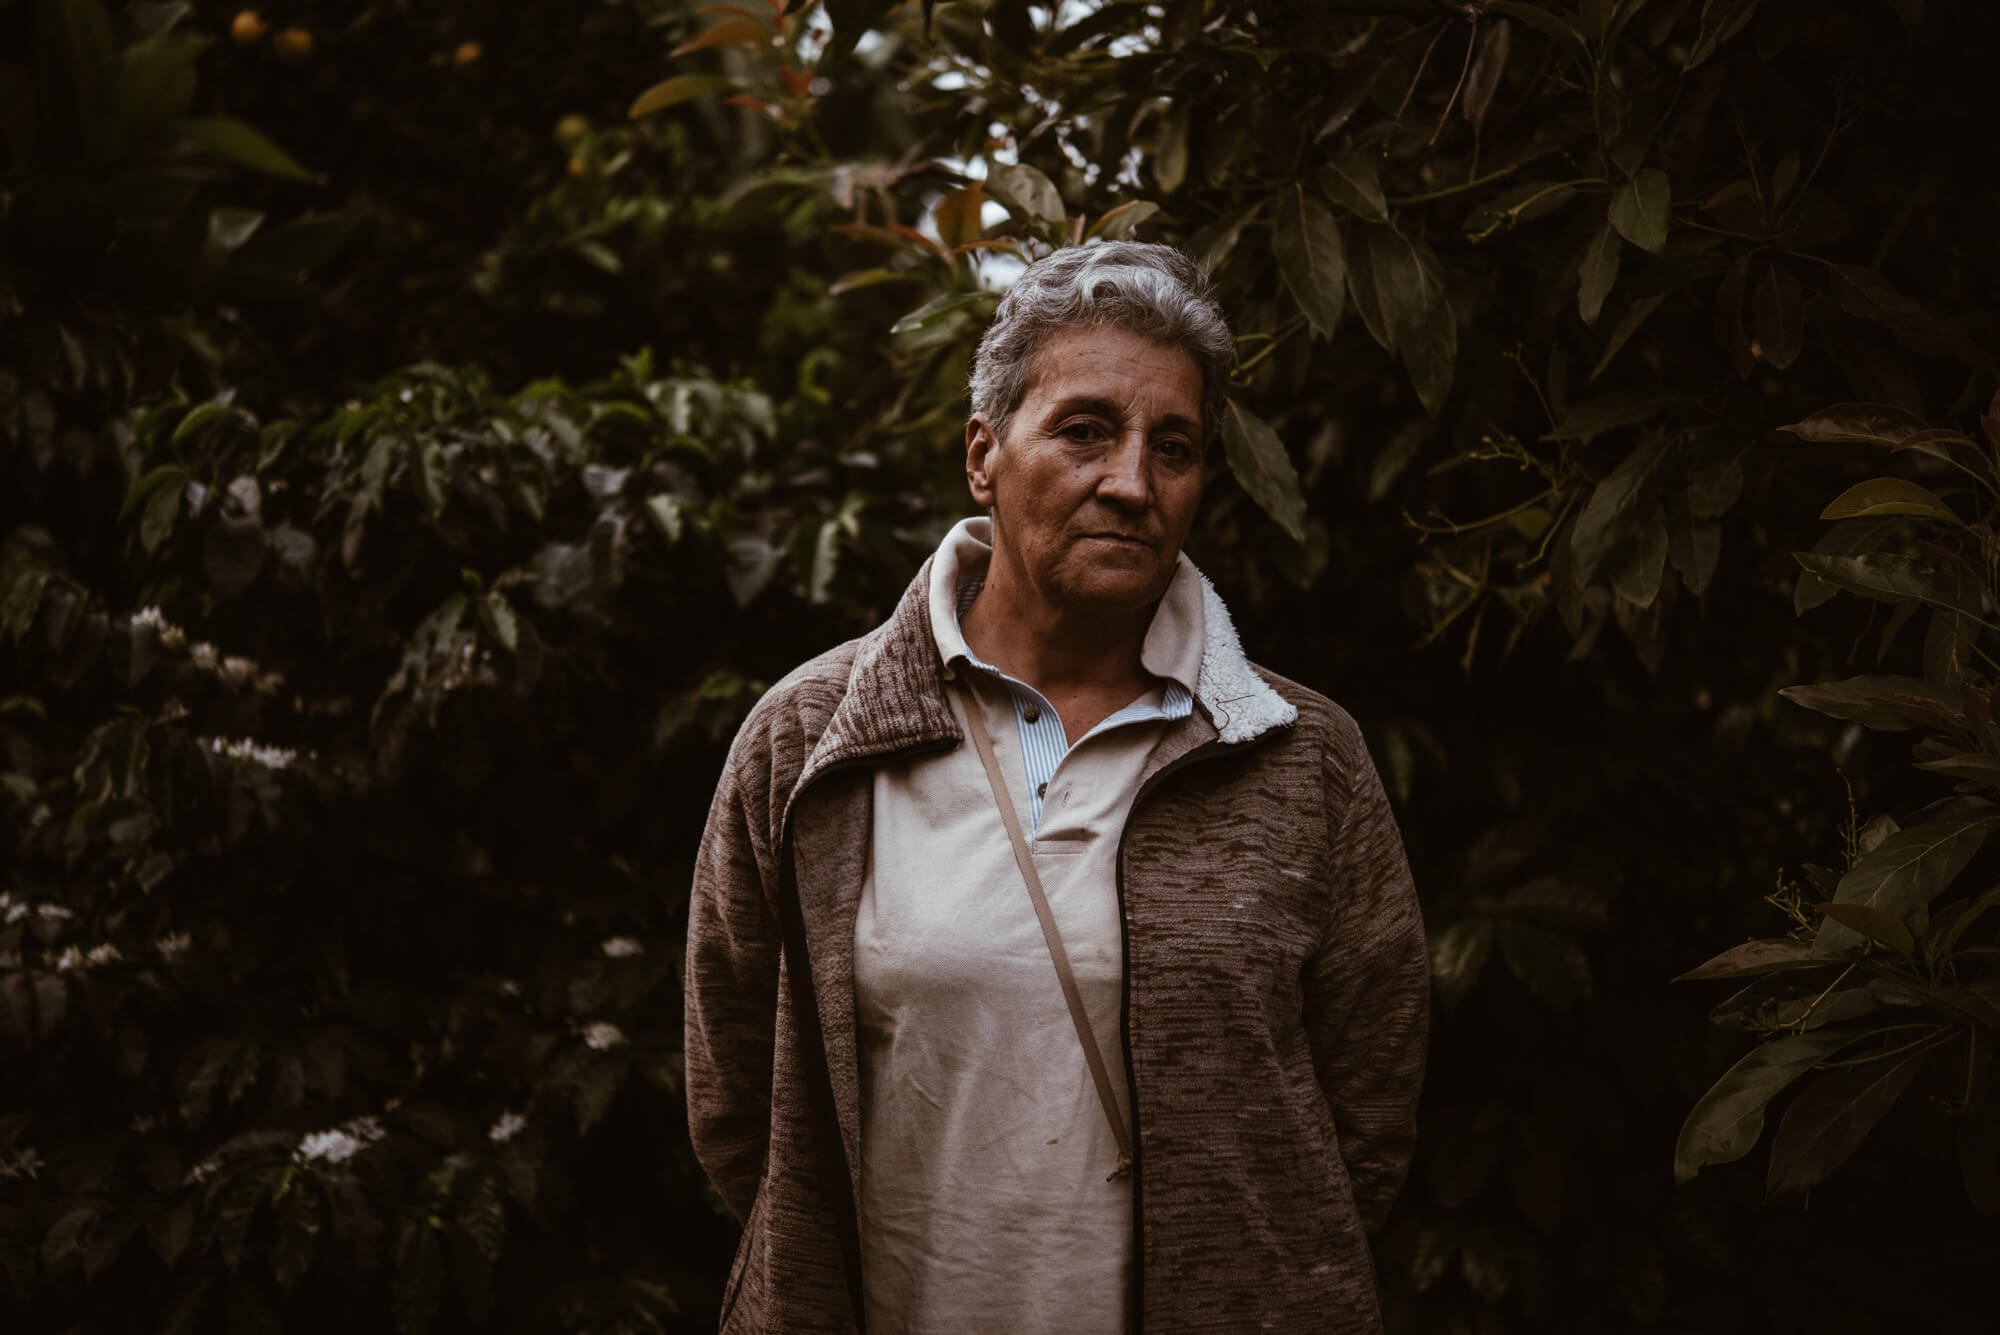 An interview with coffee farmer Amparo Maya Guerrero.